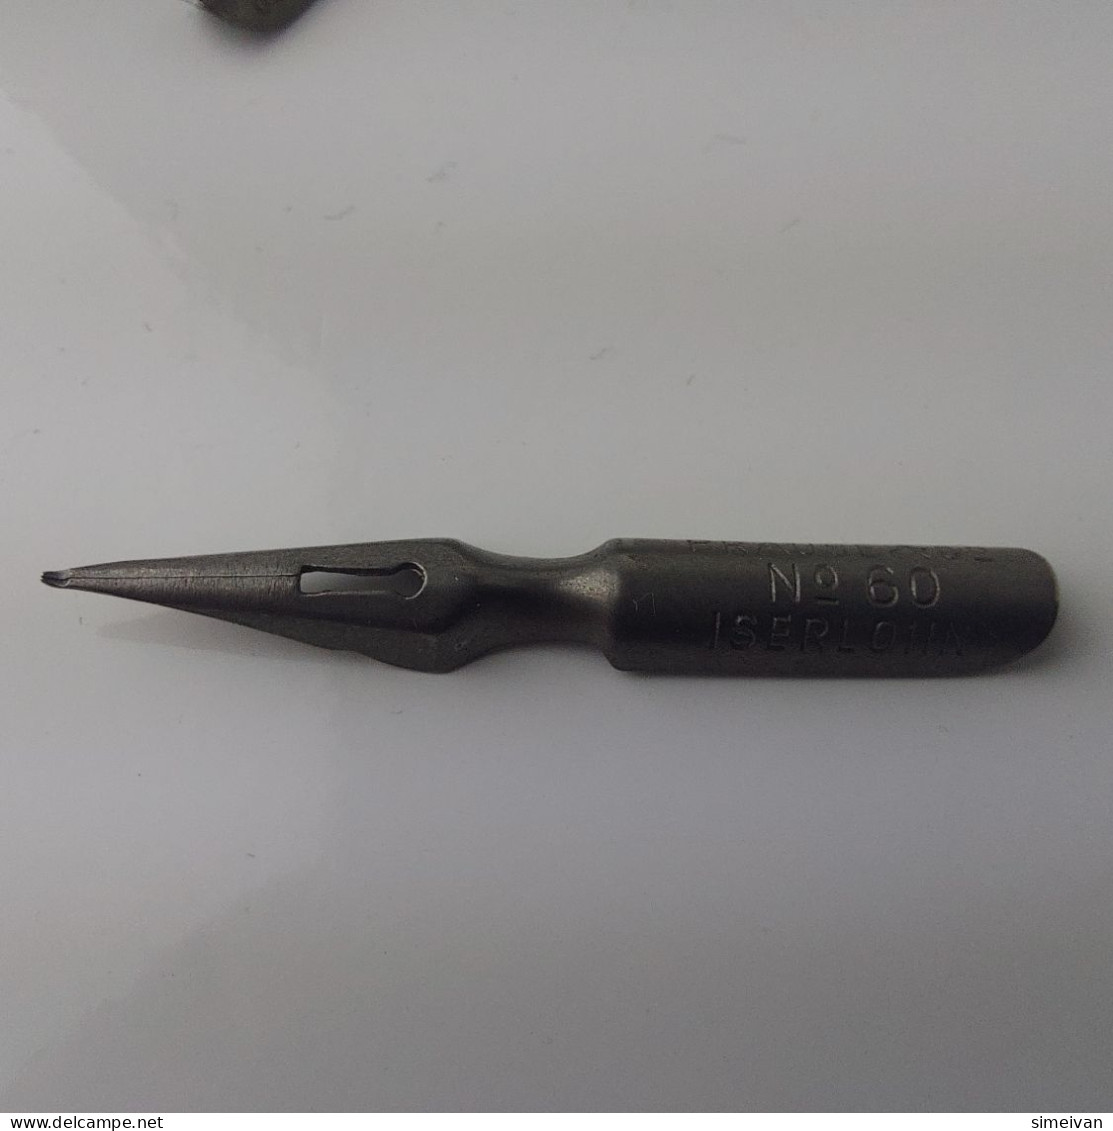 Vintage Dip Pen Nibs BRAUSE & Co No. 60 ISERLOHN Feder 16 Pcs Calligraphy #5563 - Schrijfgerief